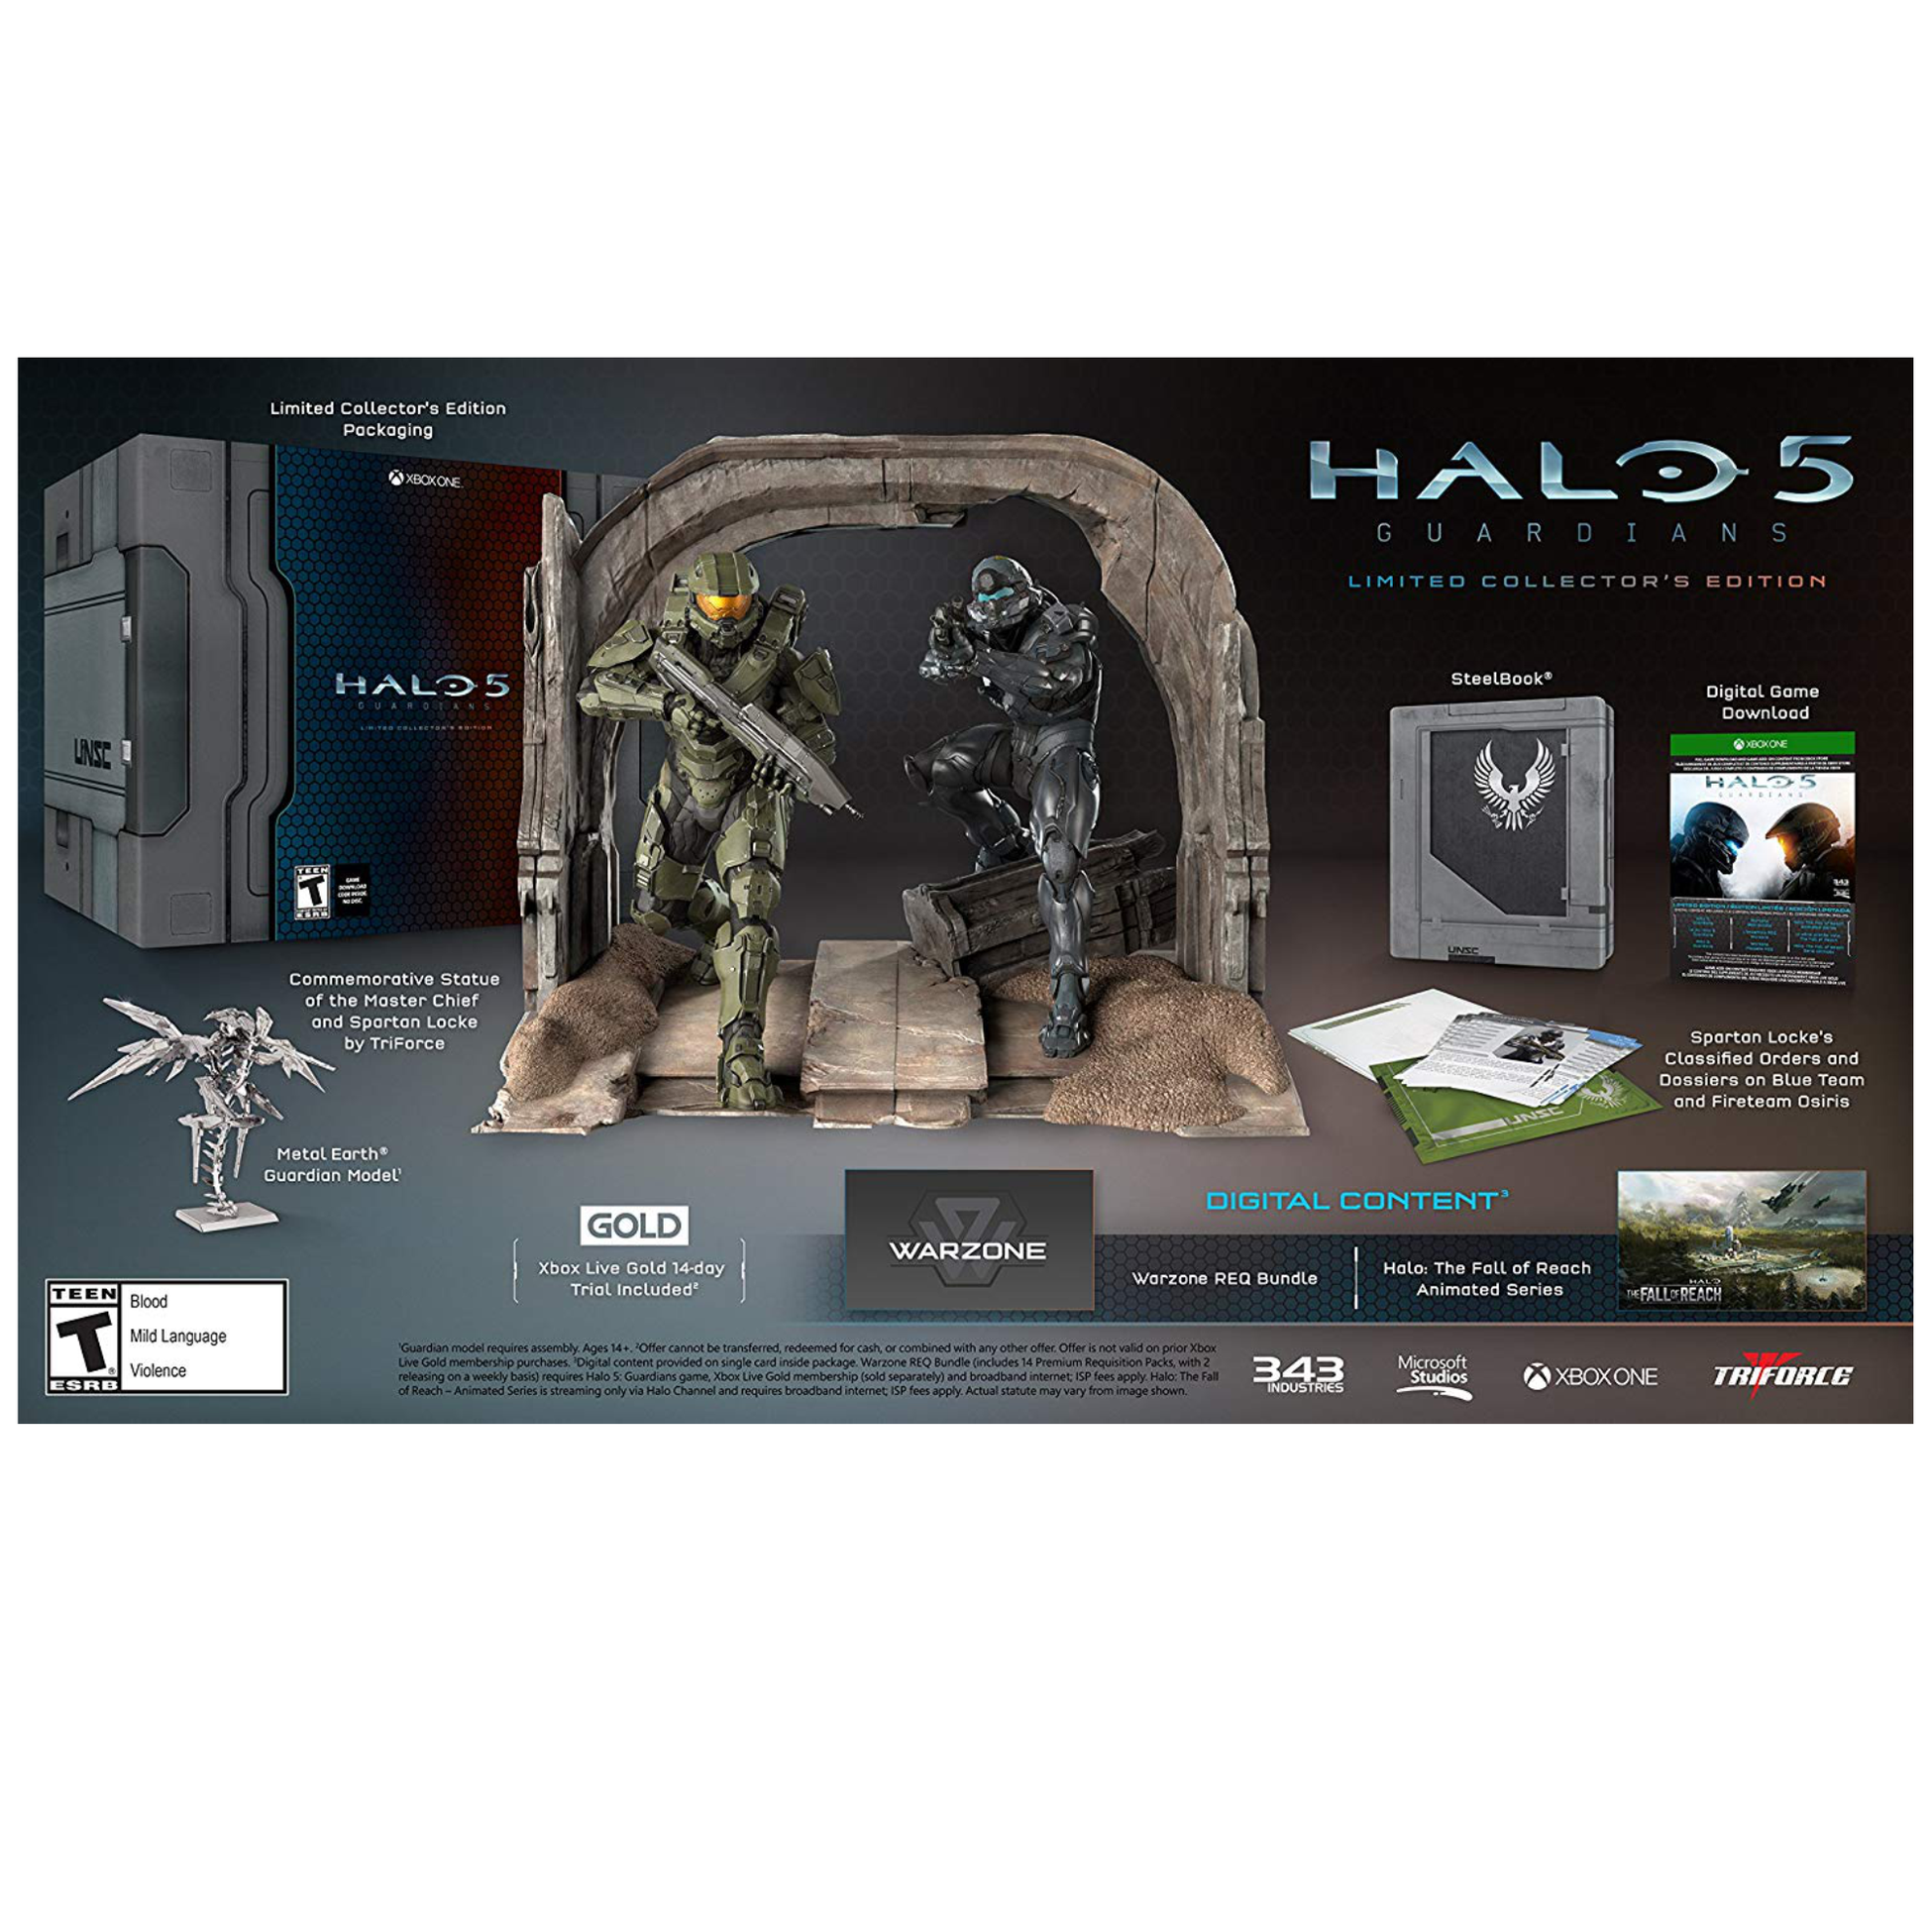 koolaz-ltd - Halo 5: Guardians Limited Collector's Edition XBOX ONE - Microsoft - Statue